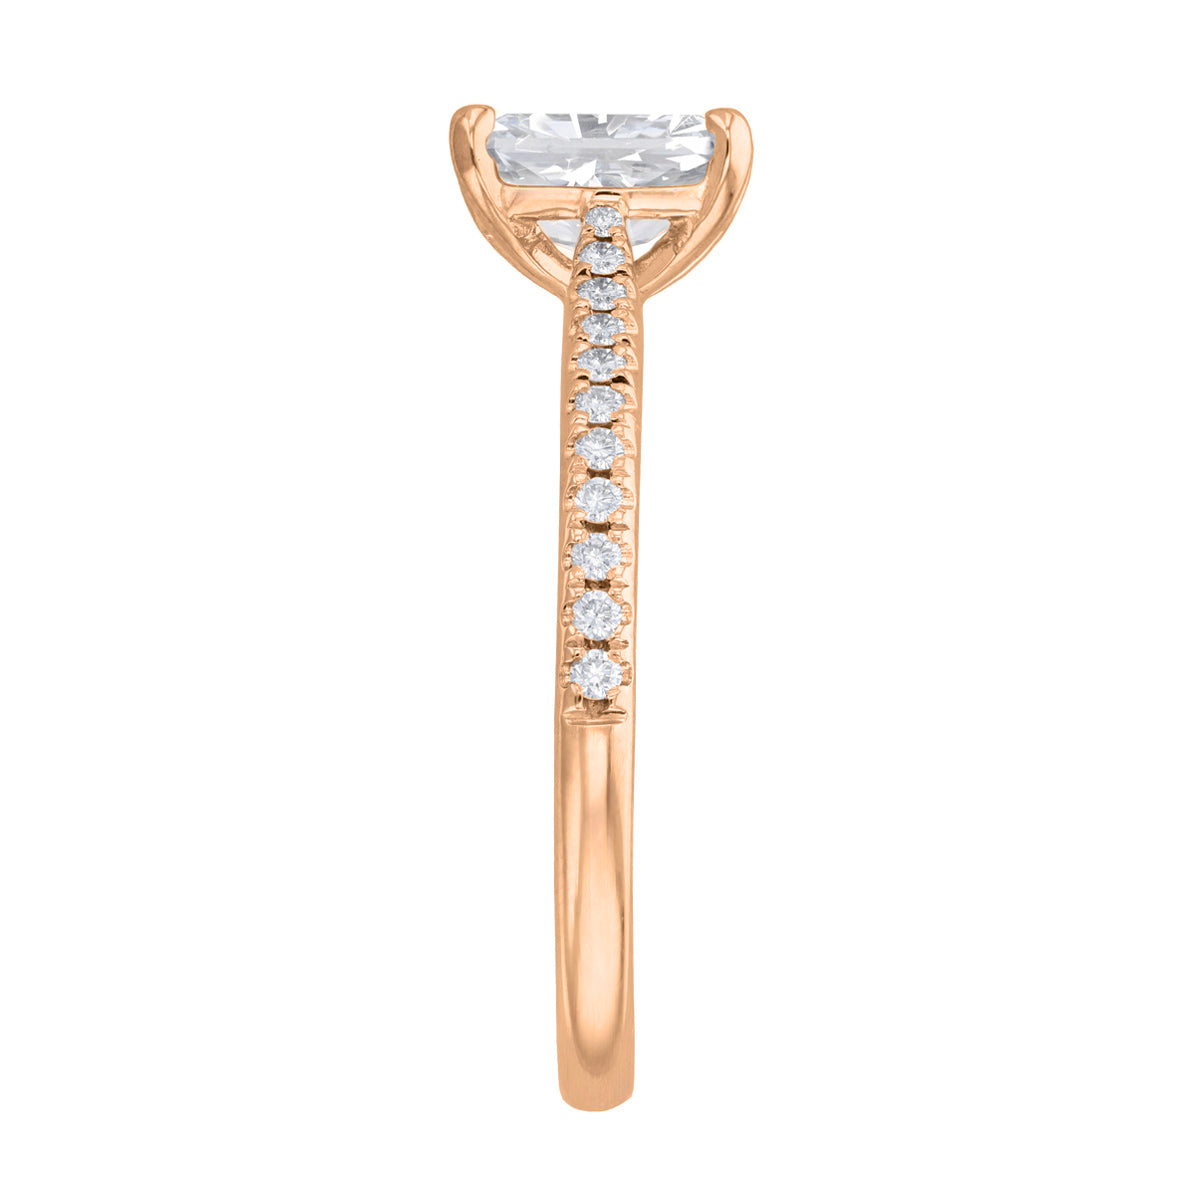 0-50ct-ophelia-shoulder-set-radiant-cut-solitaire-diamond-engagement-ring-18ct-rose-gold